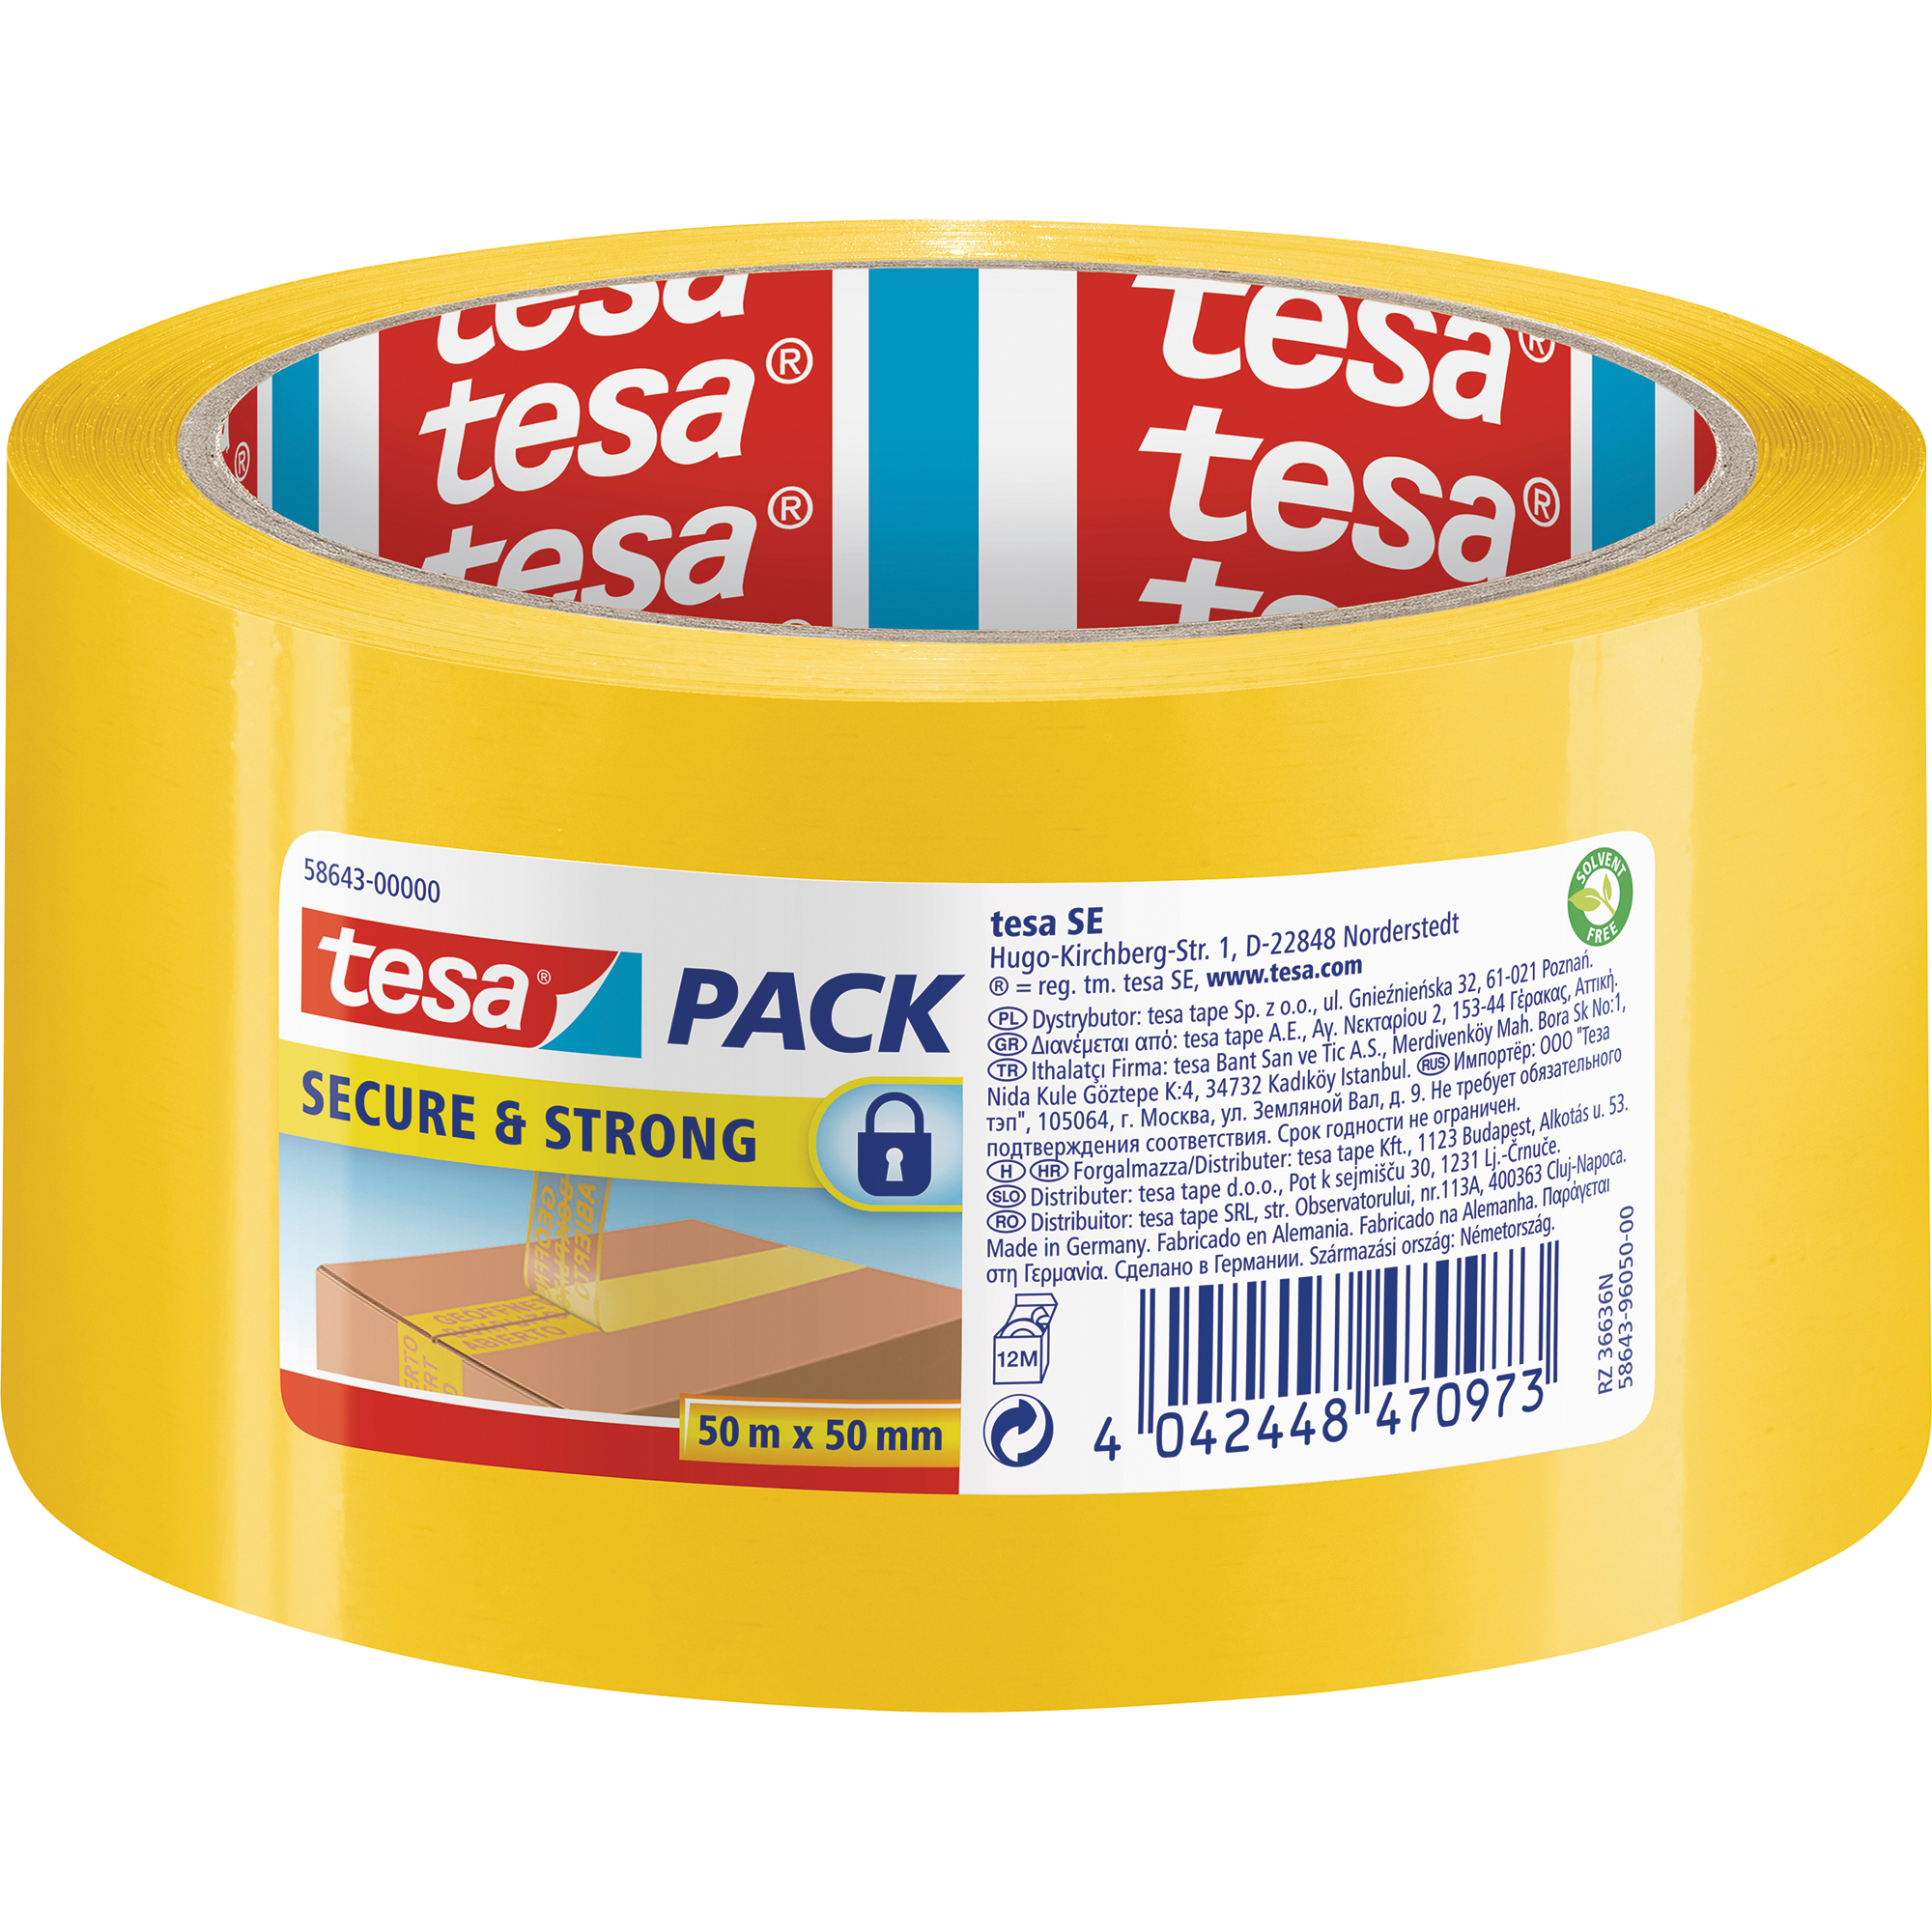 tesa® Packband tesapack® Secure & Strong